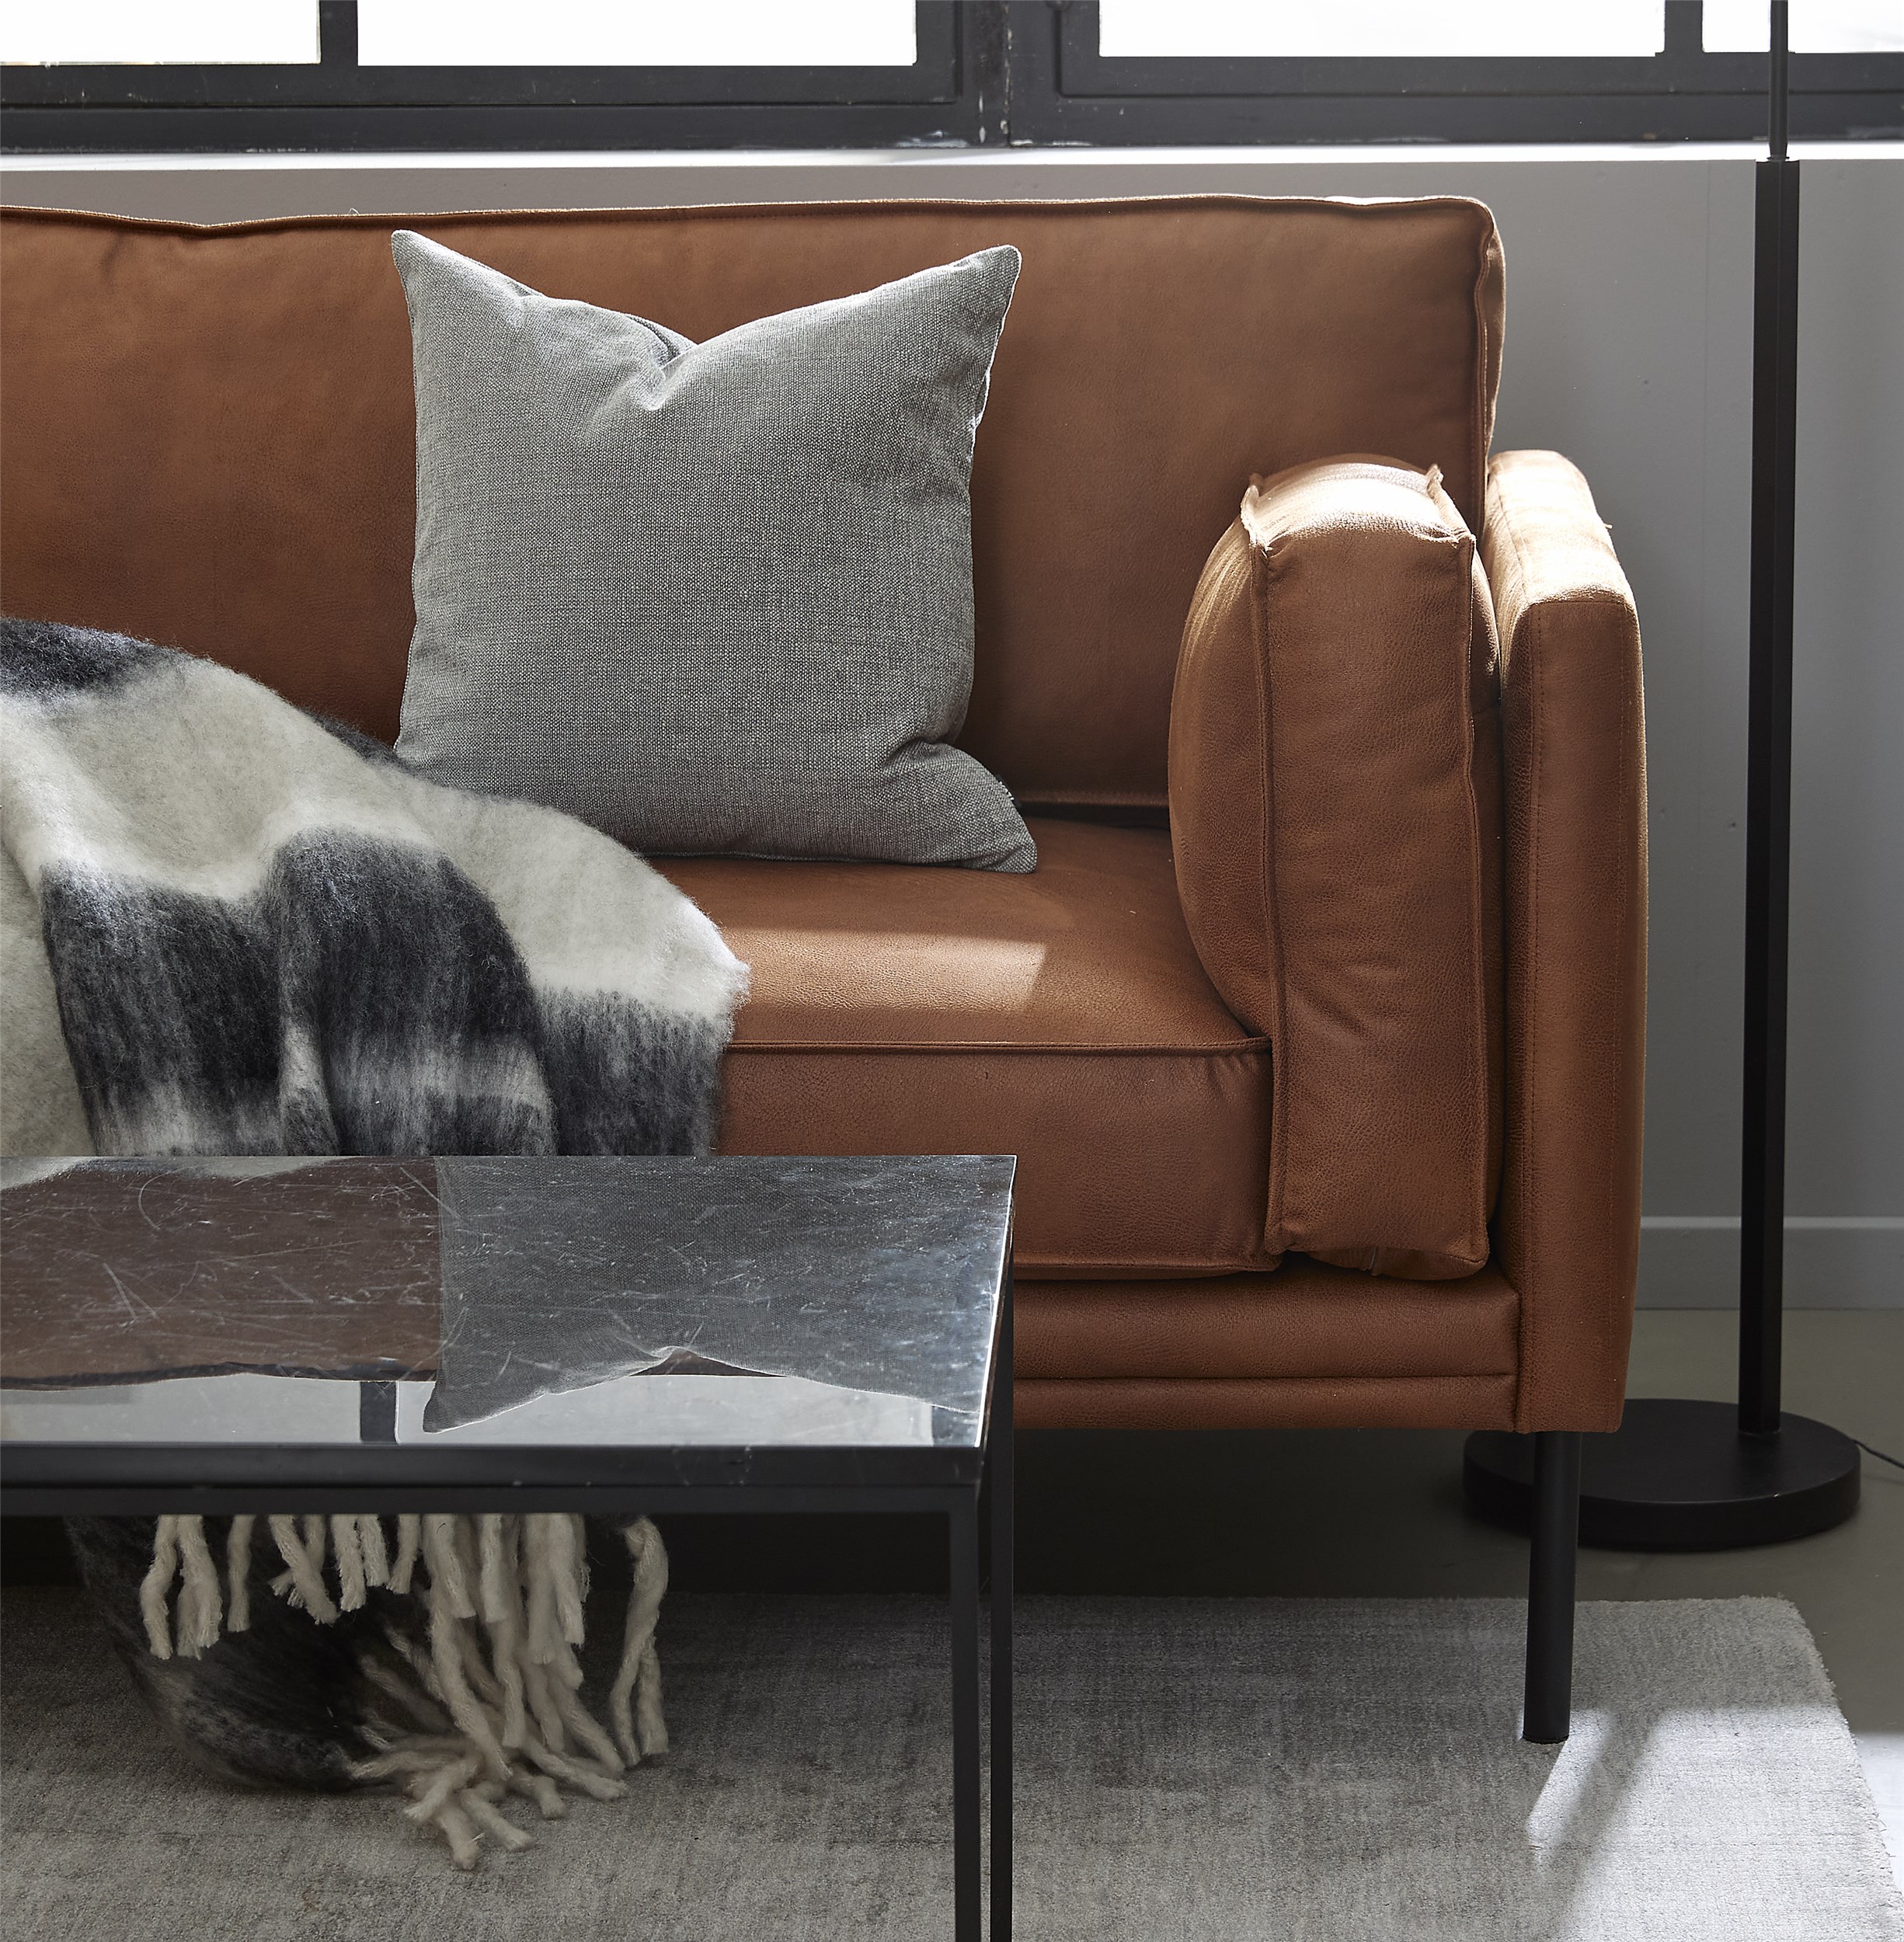 2 og 3 personers sofa | Lille med uden chaiselong | ILVA